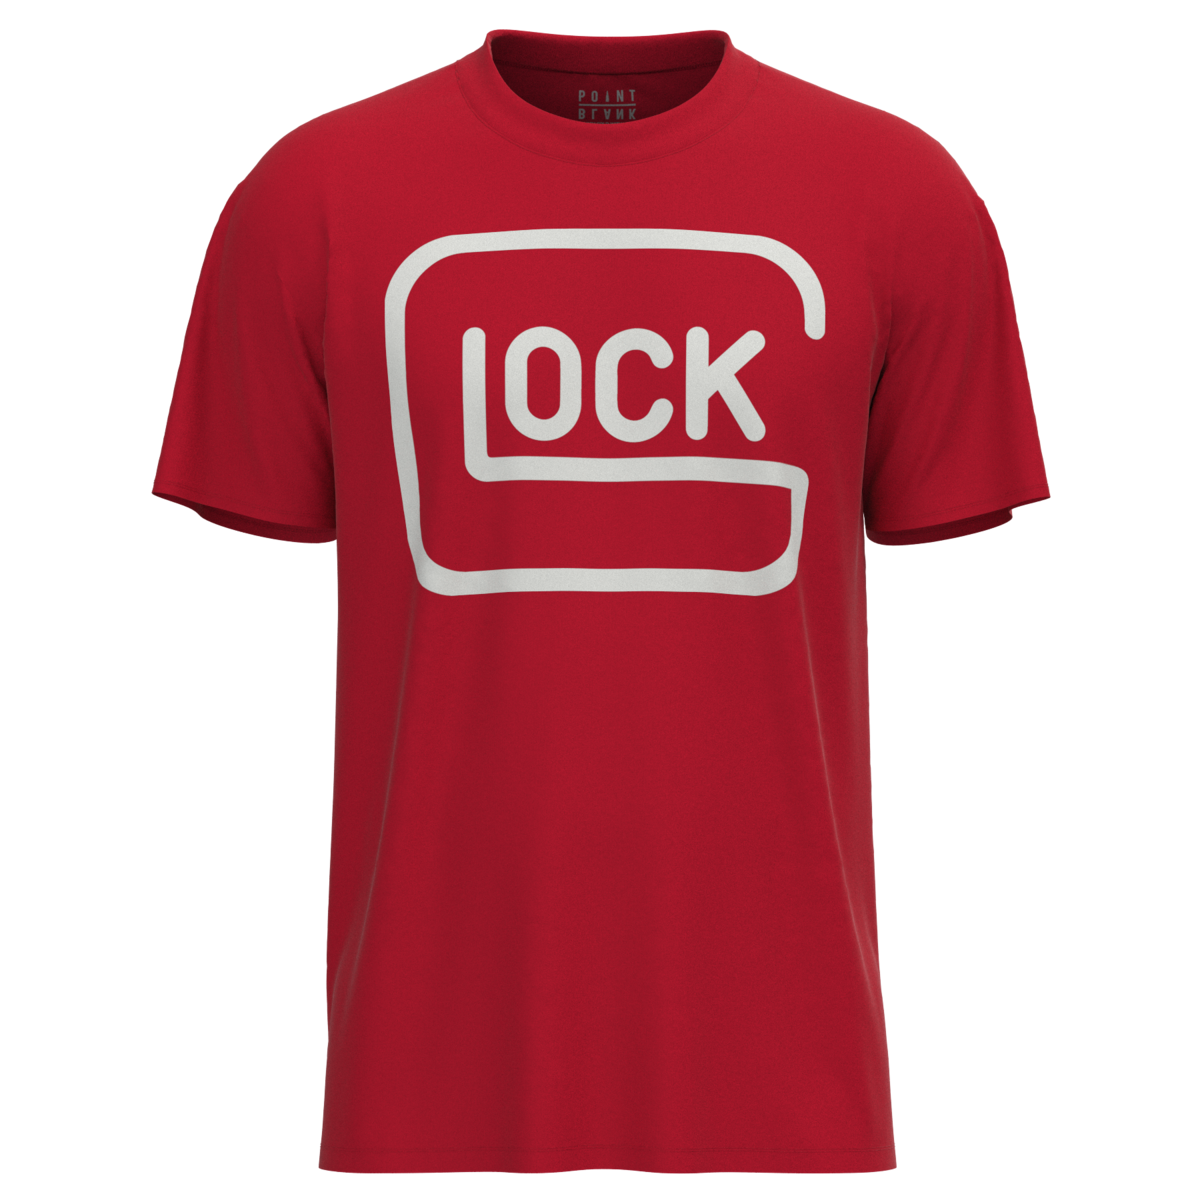 Glock Red T Shirt